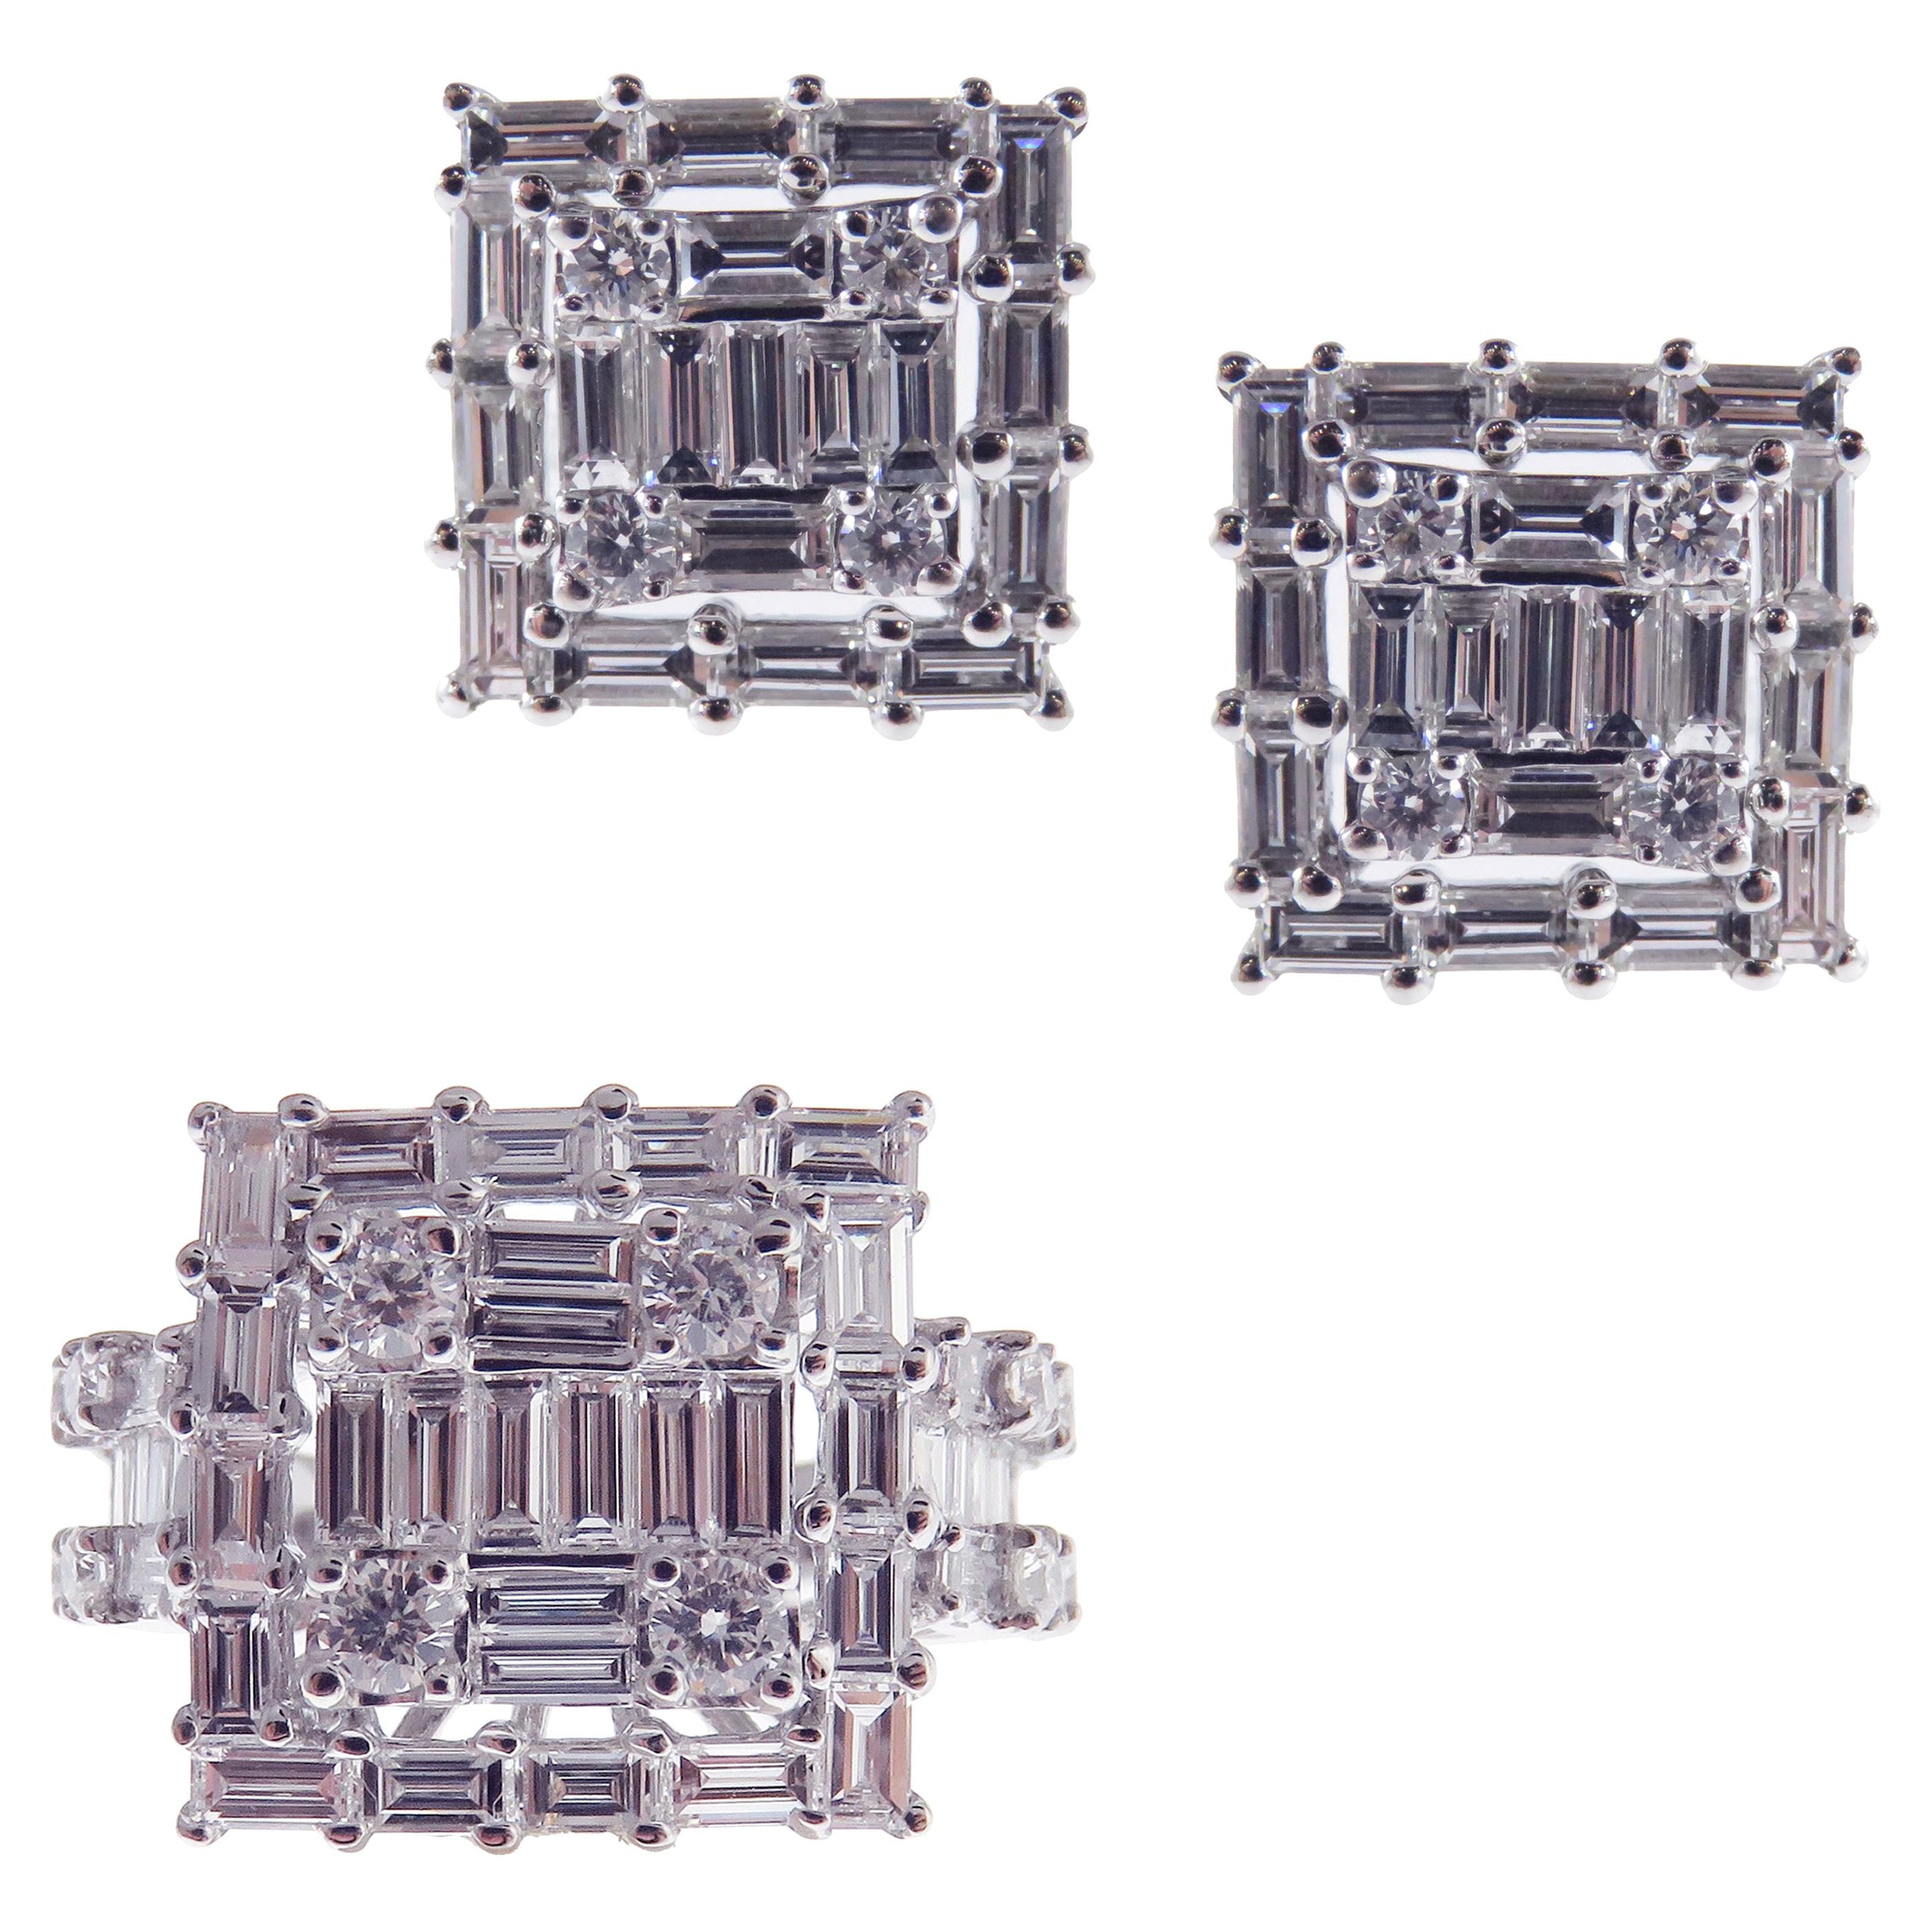 18 Karat White Gold Diamond Medium Square Baguette Earring Ring Set